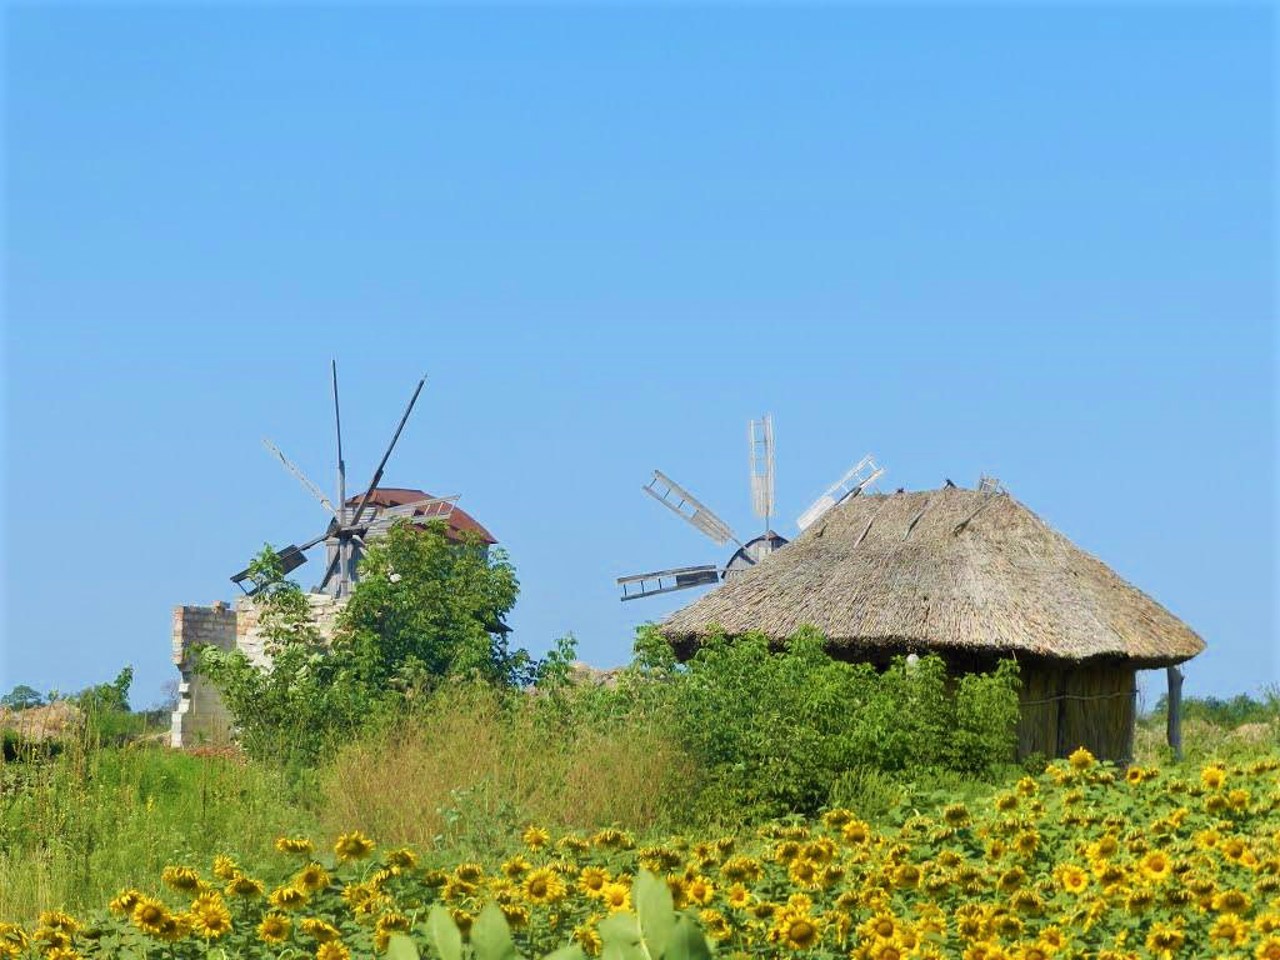 Village Veremiivka, Zolotonosha district